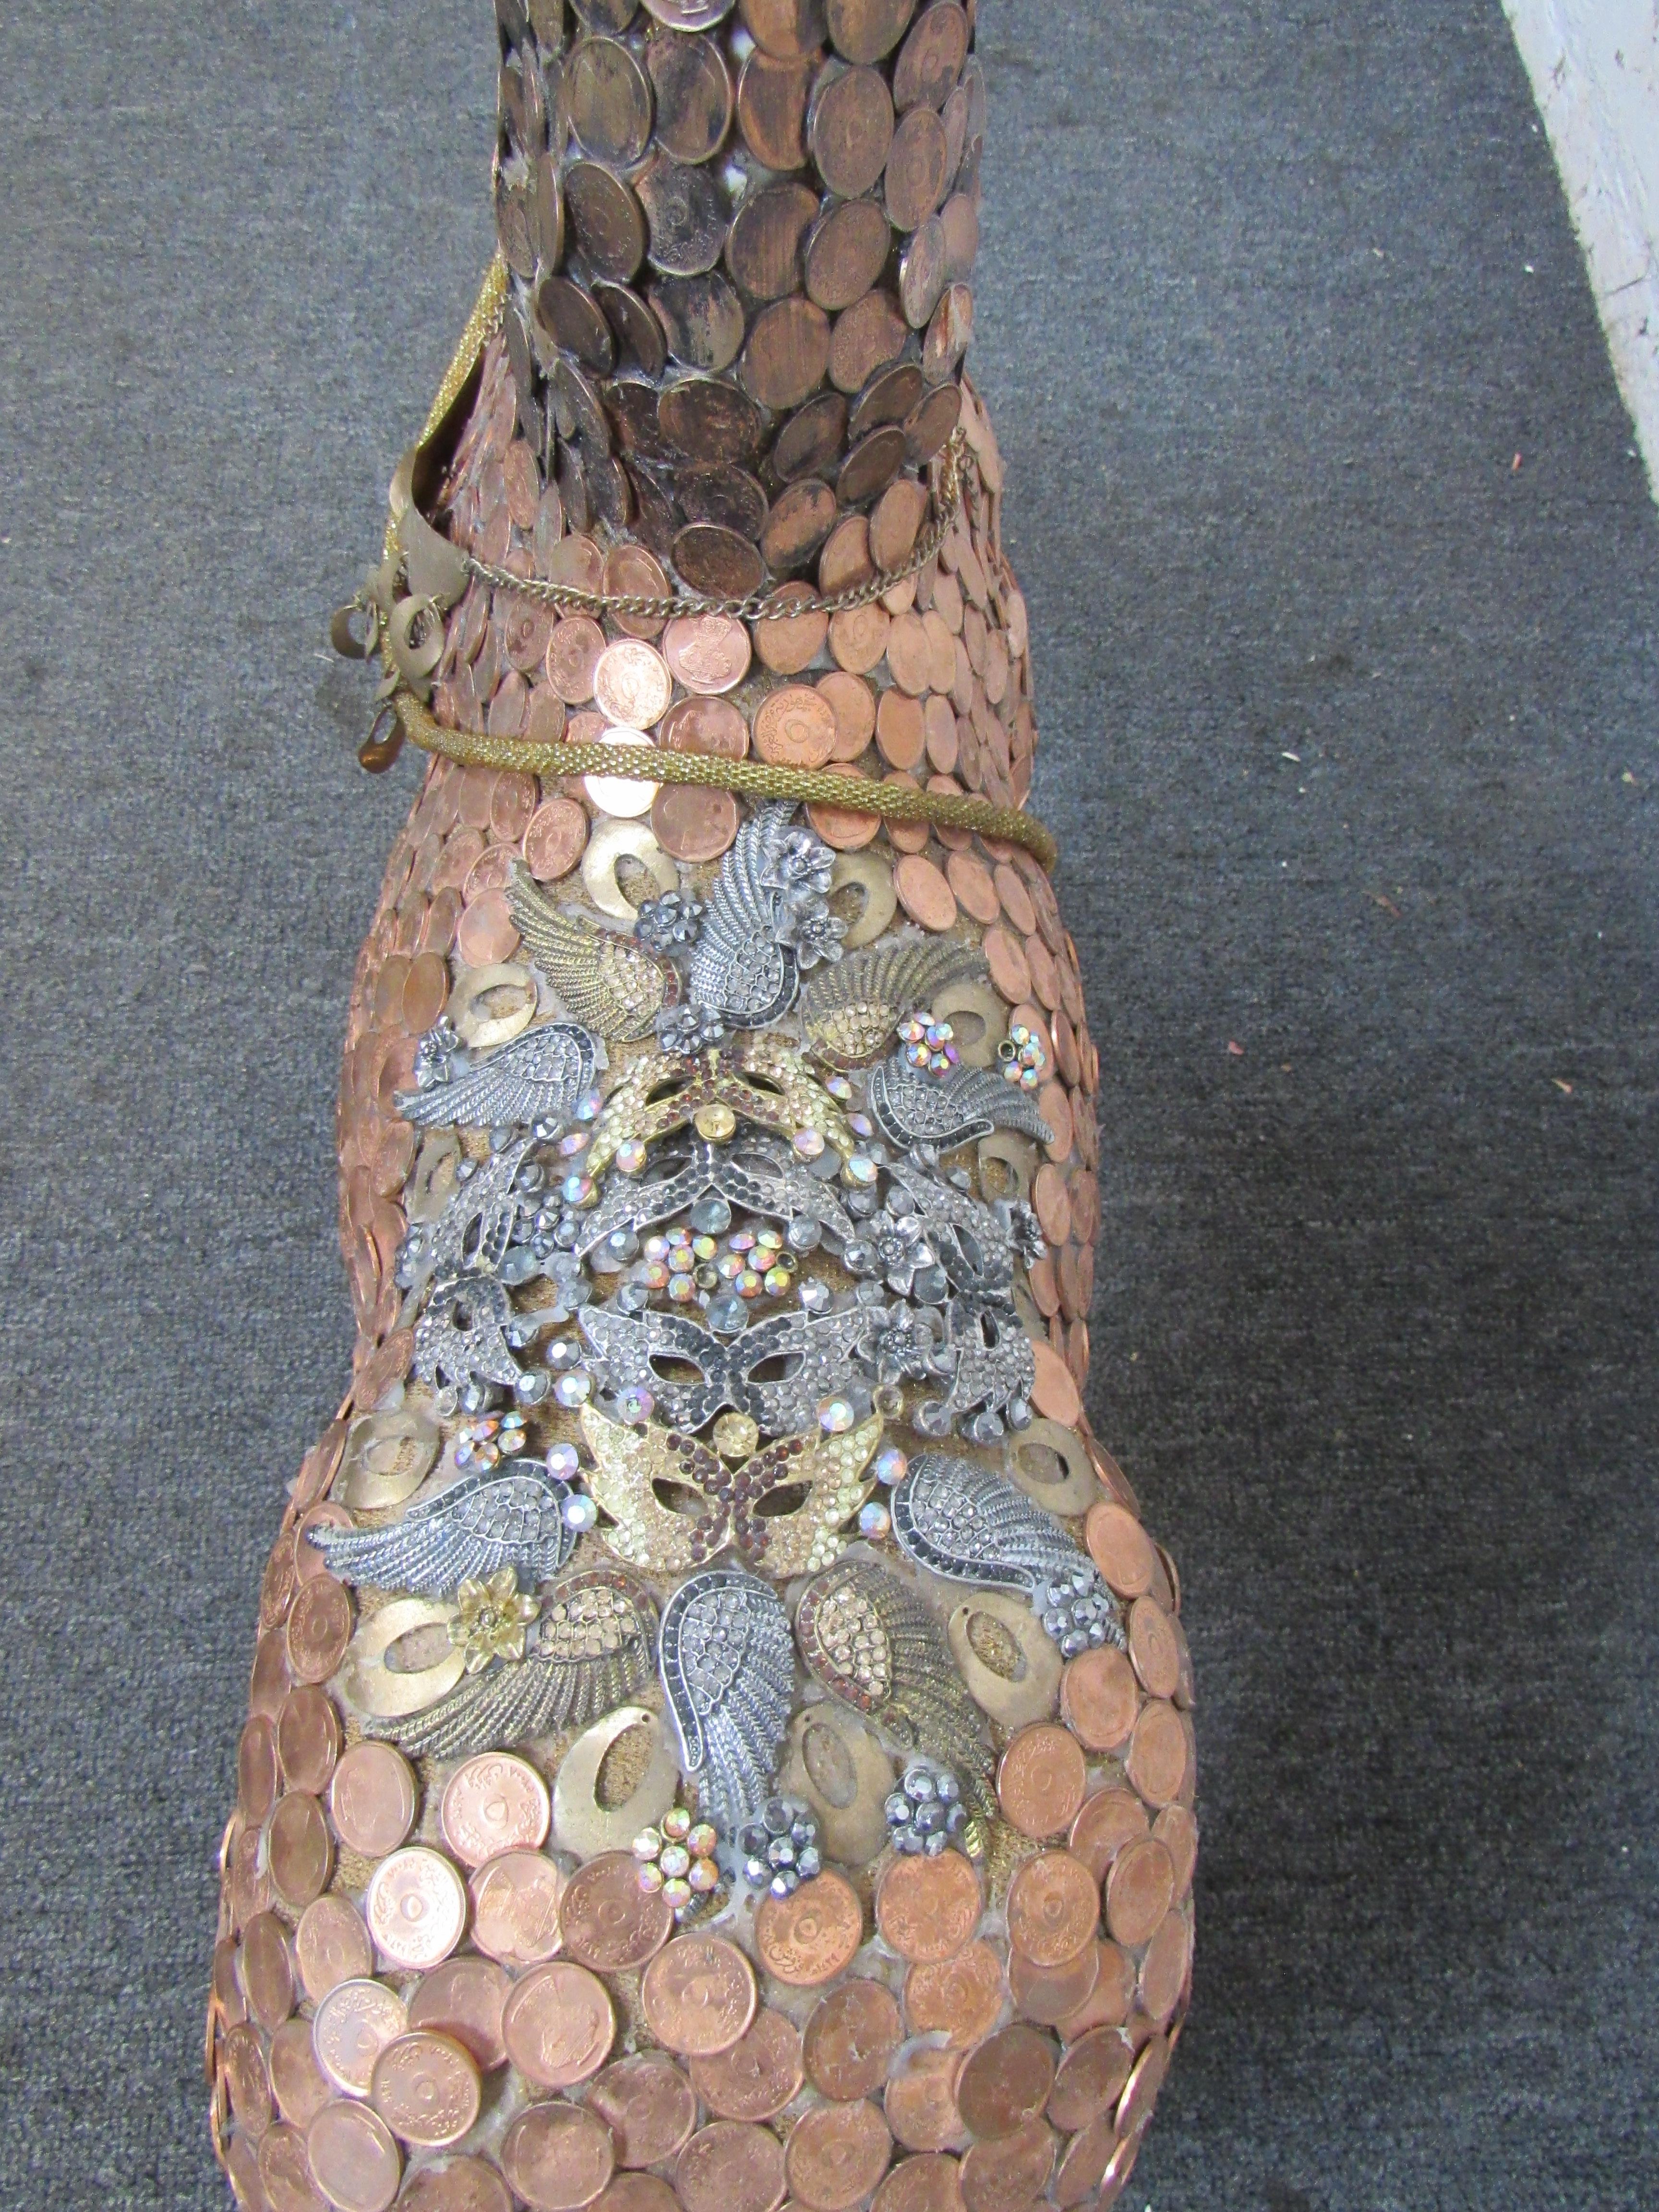 horse pennies